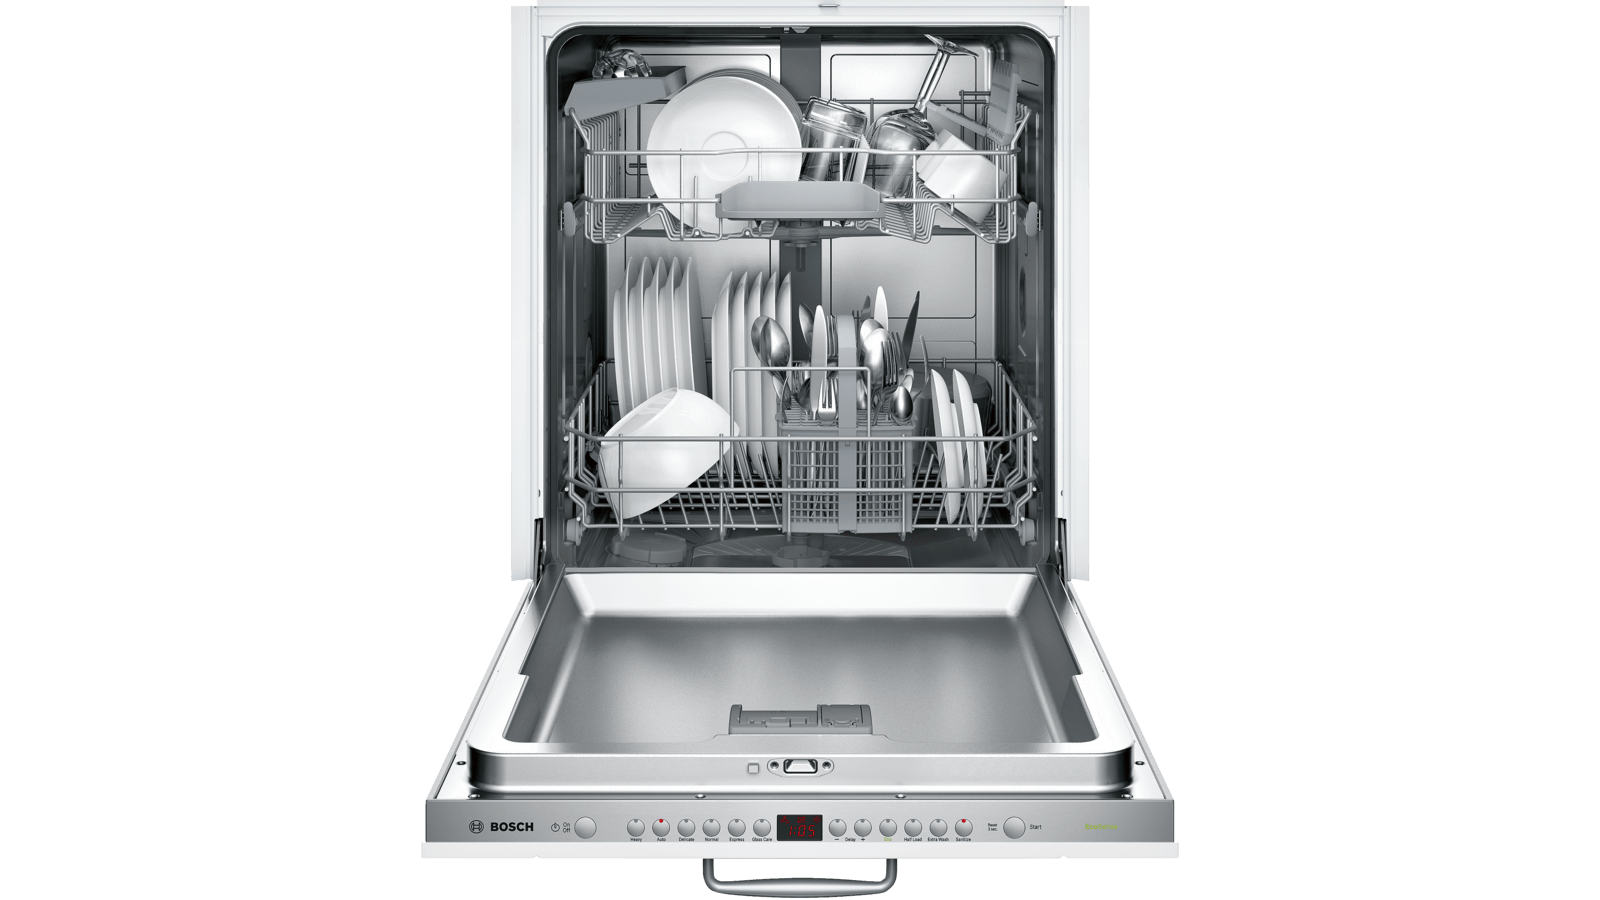 BOSCH - SGV63E03UC - Panel Ready Dishwasher